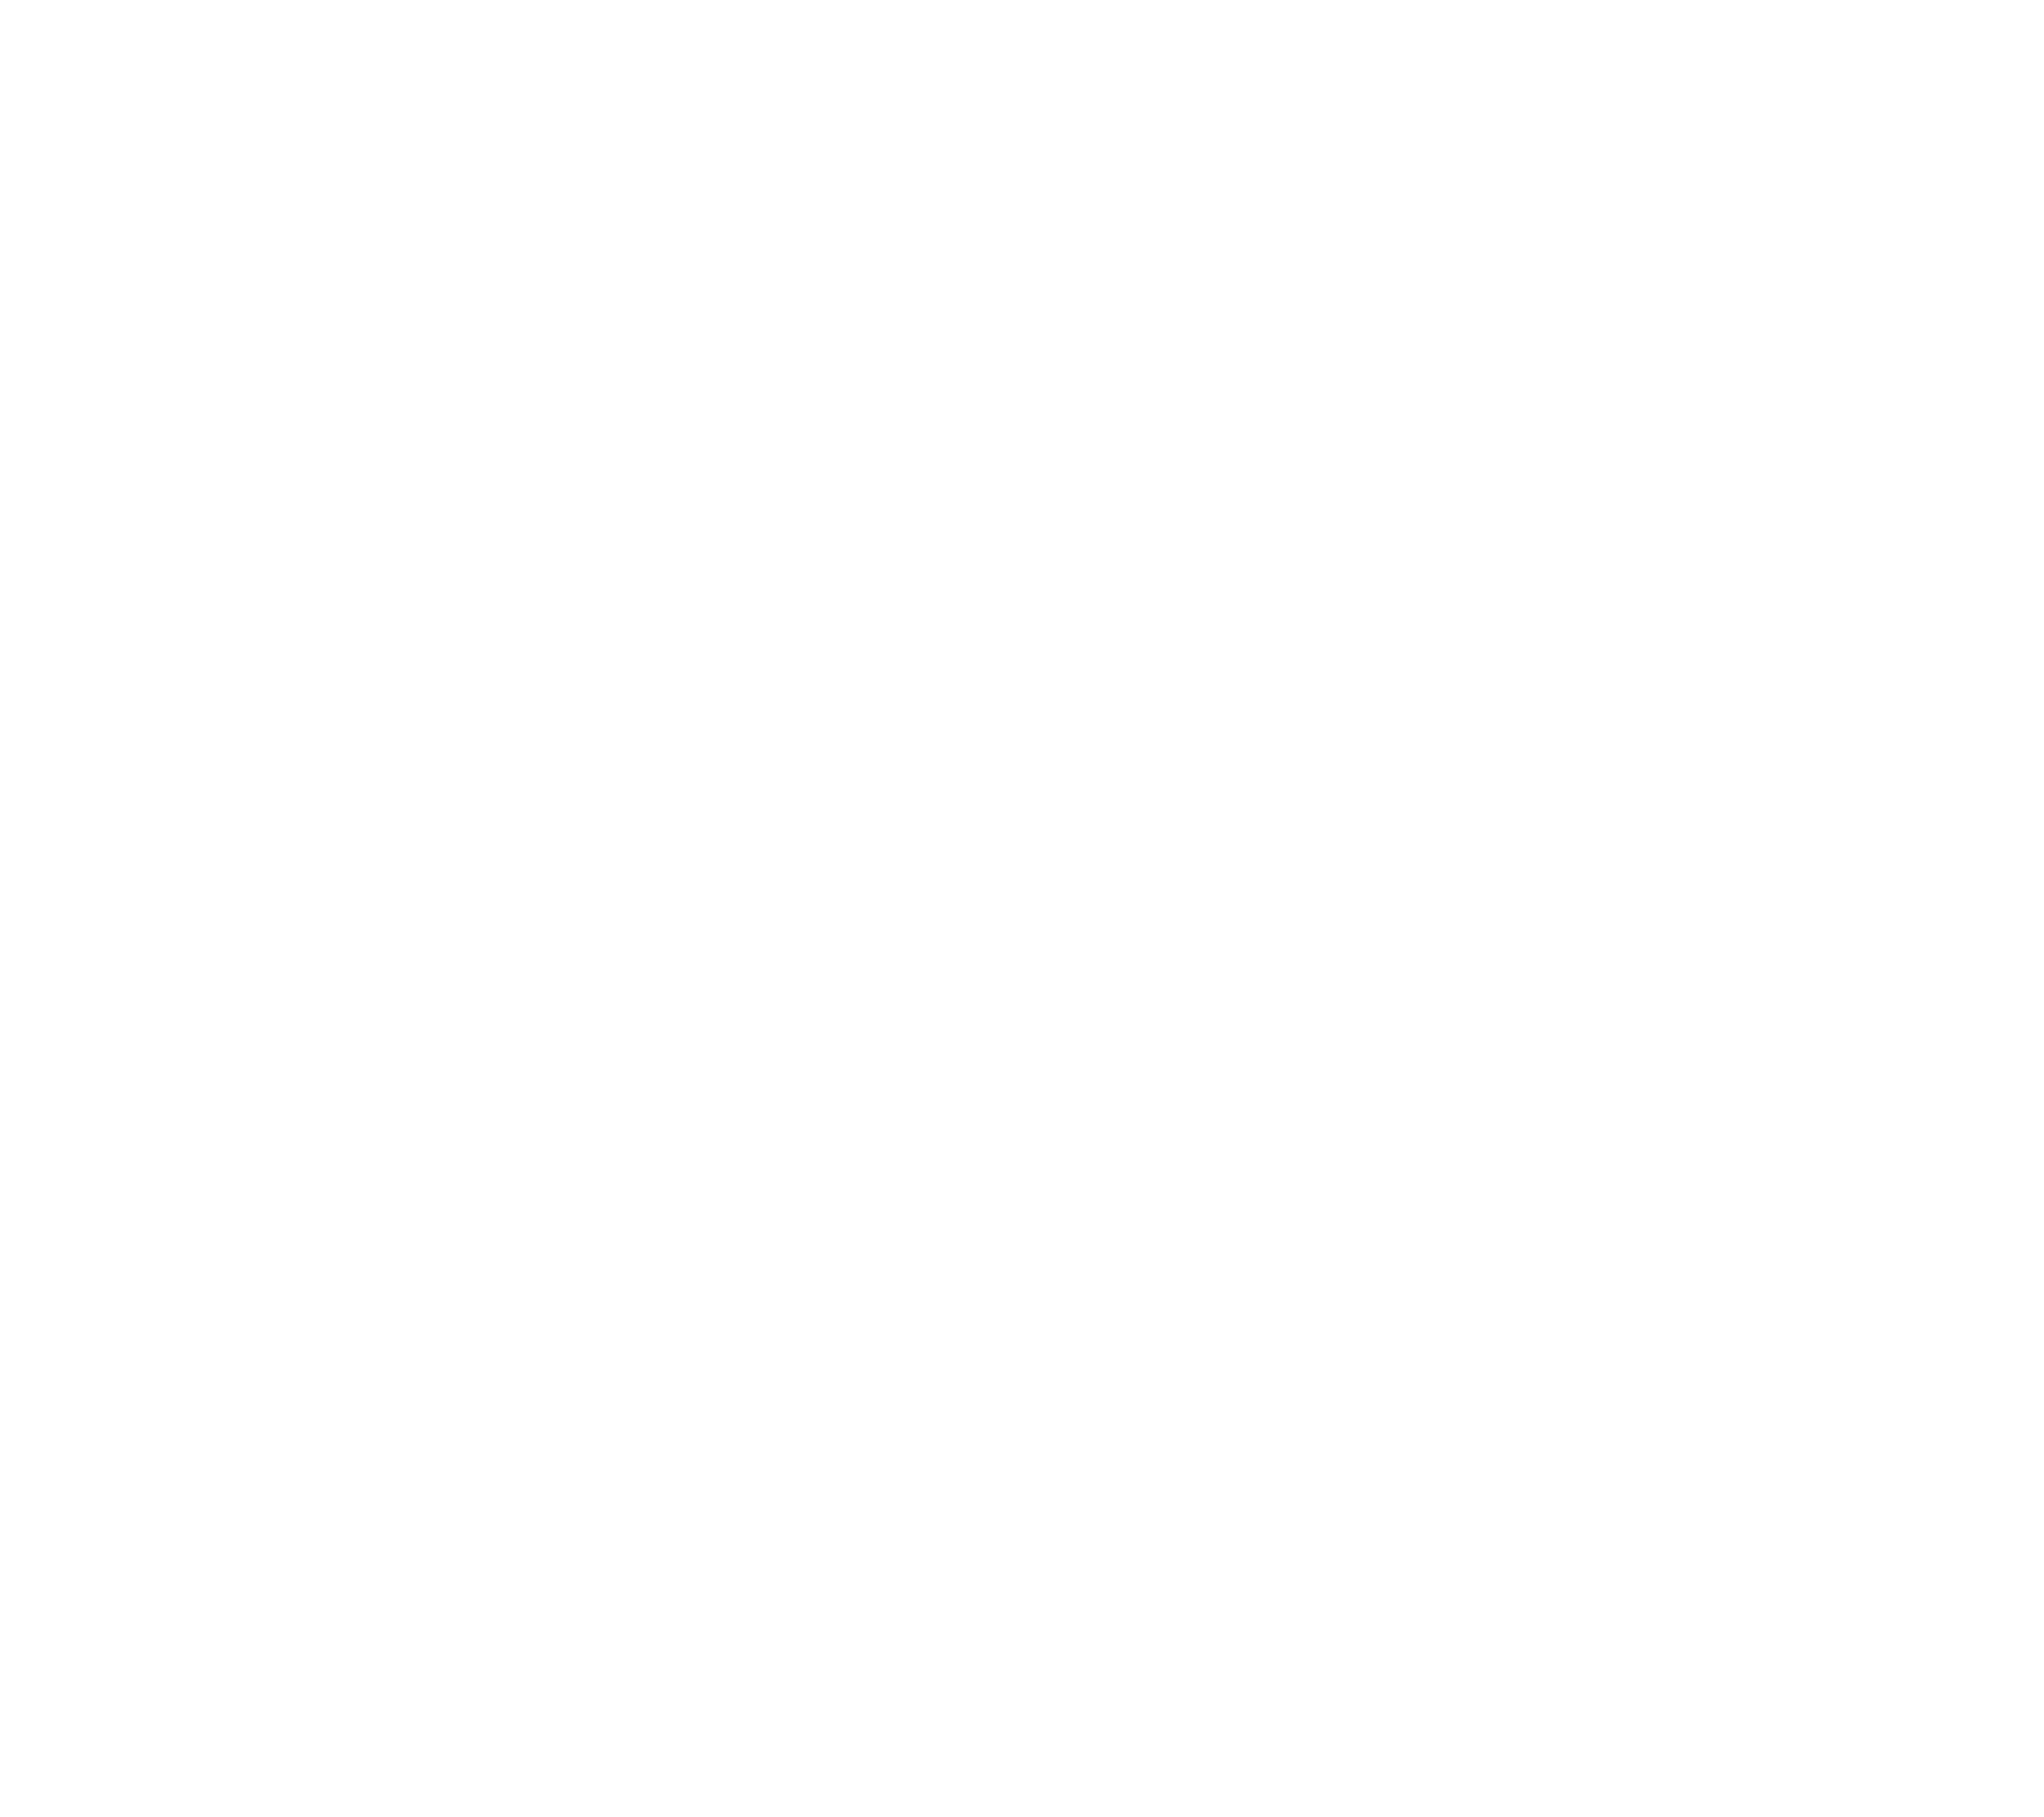 Informative text describing factual details about Paris, Berlin, and Bubblegum Alley in San Luis Obispo